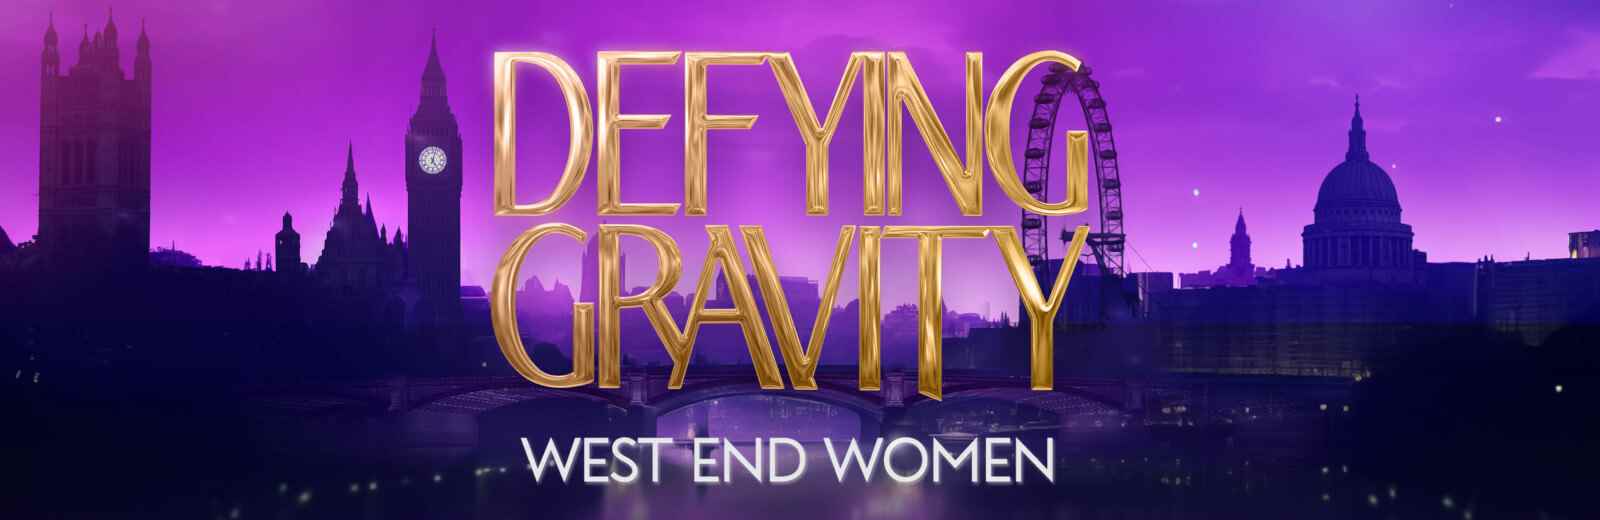 Defying Gravity - West End Women